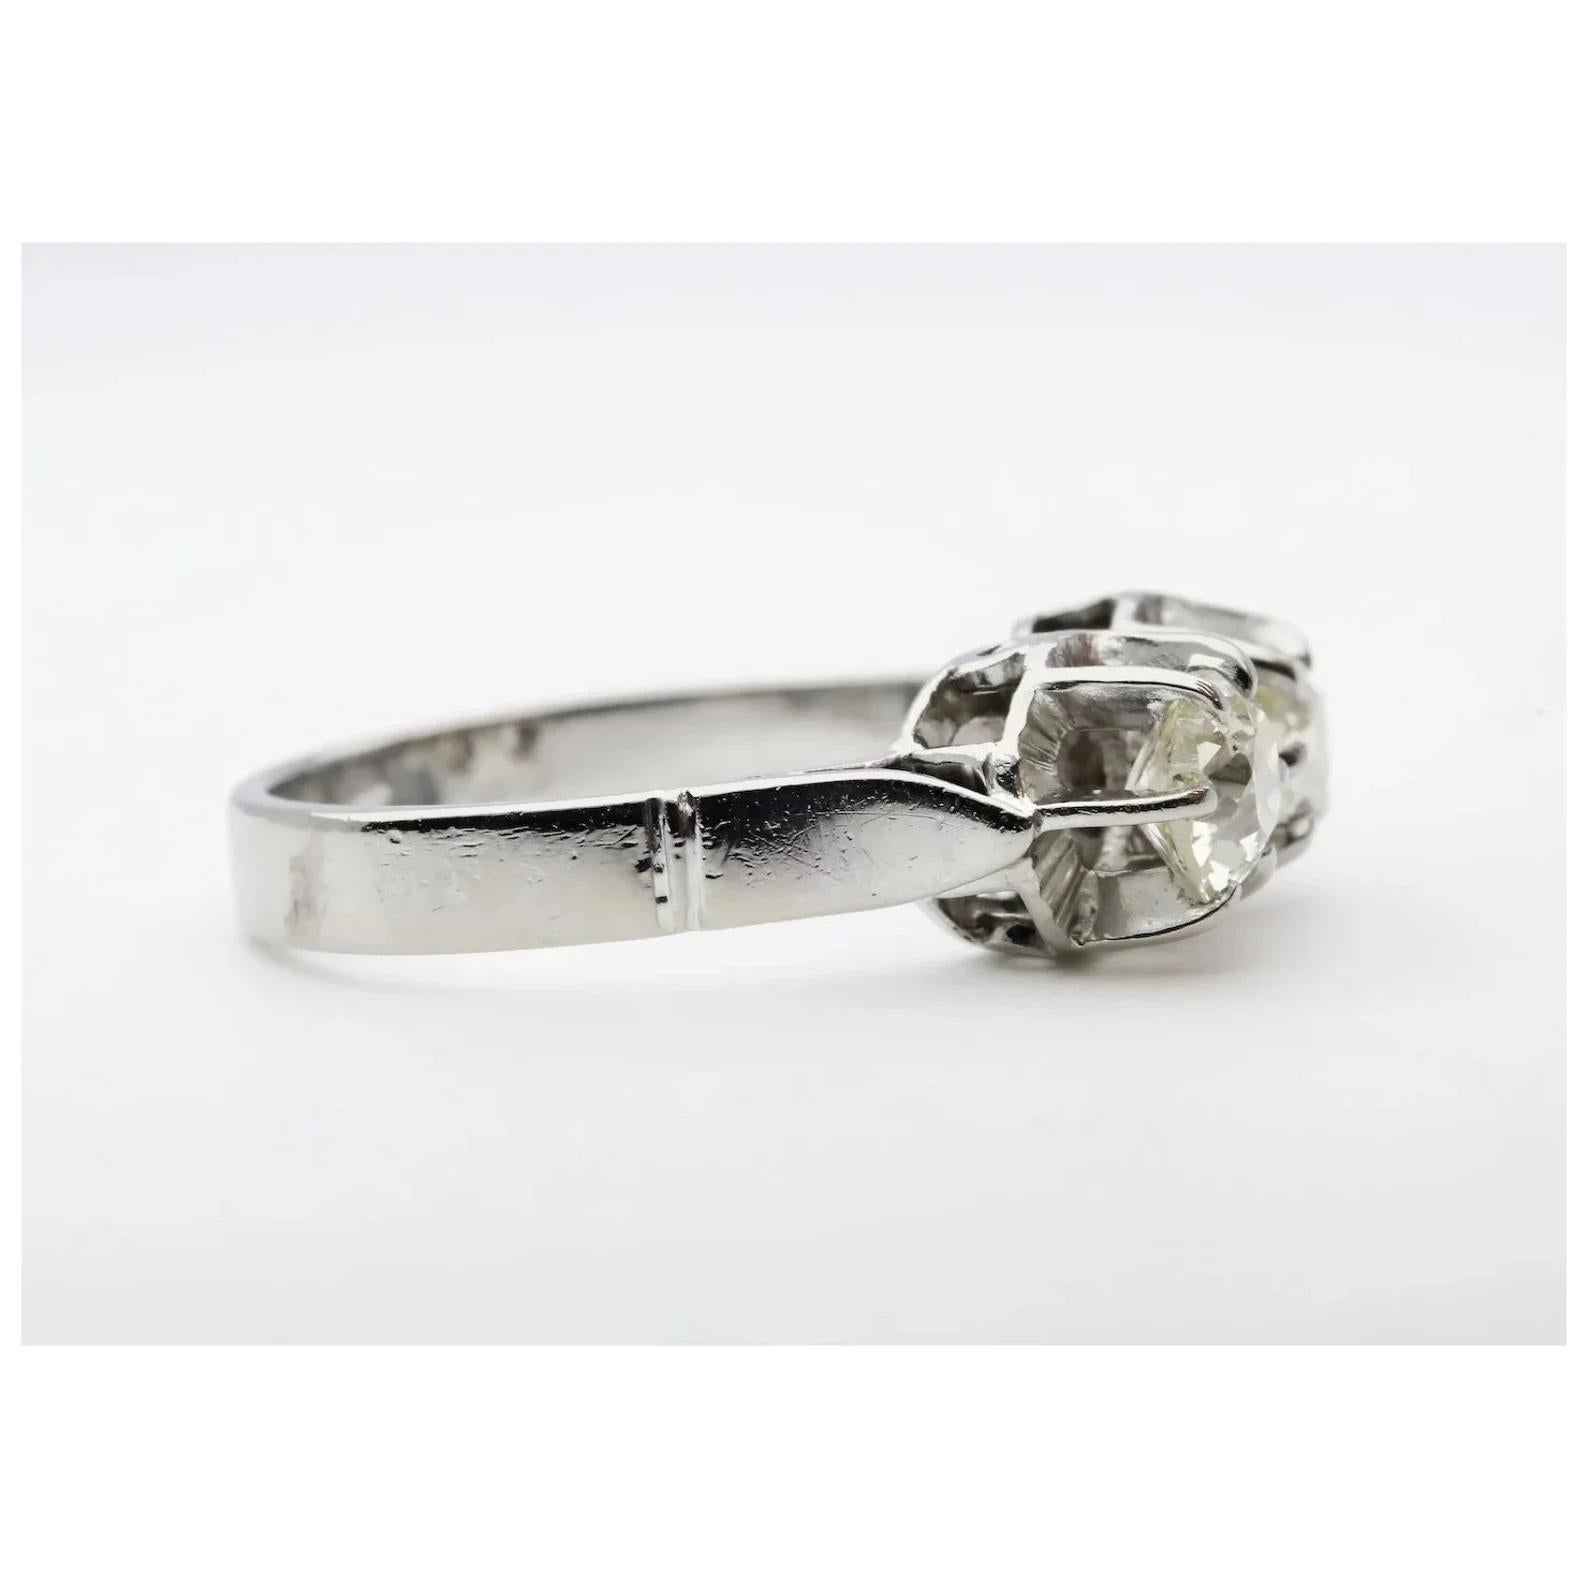  Art Deco Toi et Moi 0.97 Carat Old Mine Cut Diamond Ring in 18K White Gold In Good Condition For Sale In Boston, MA